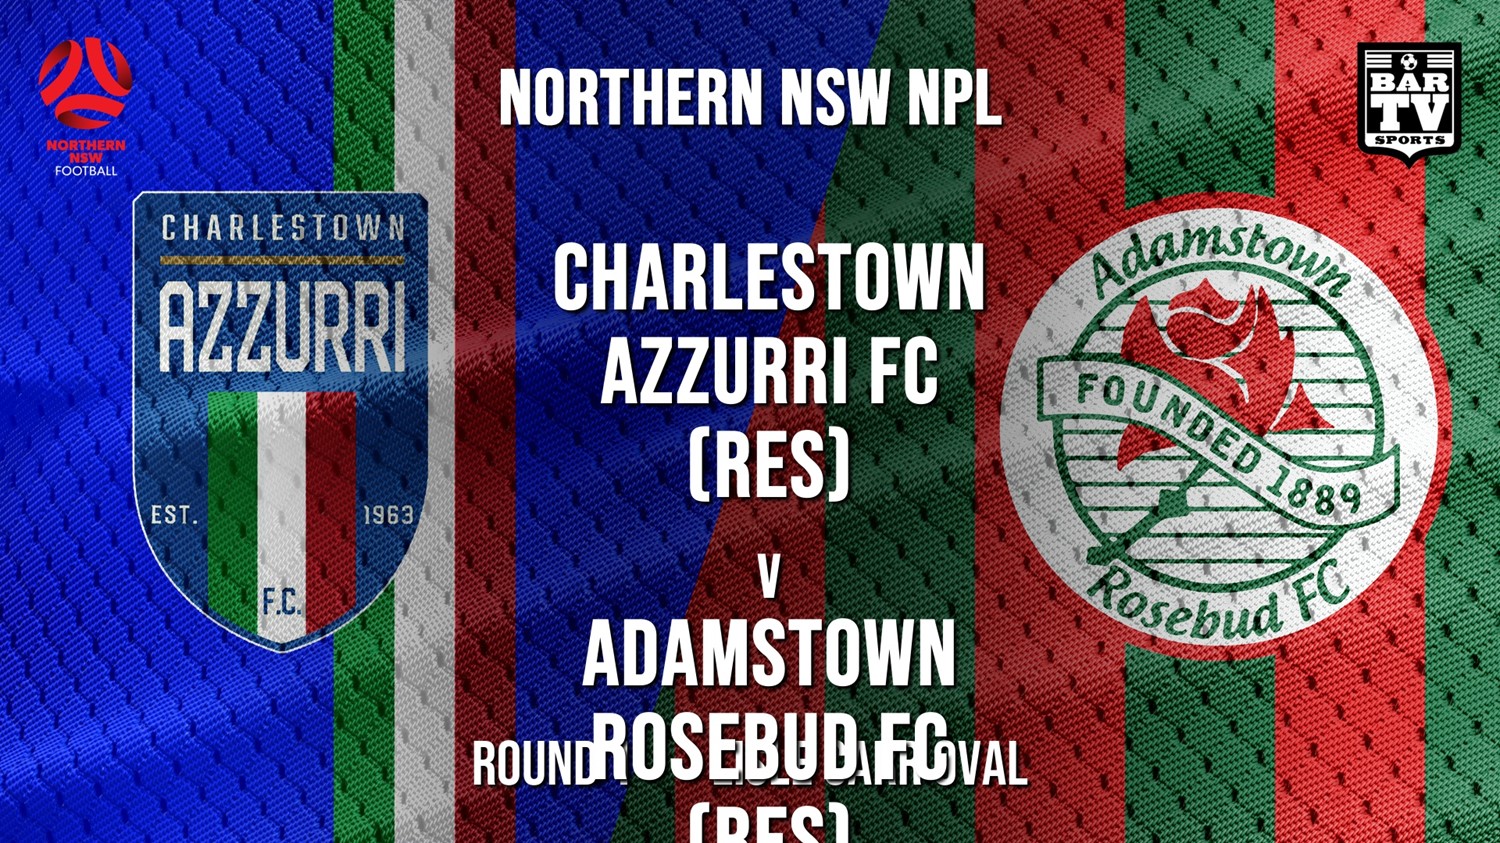 NPL - Northern NSW Reserves Round 1 - Charlestown Azzurri FC (Res) v Adamstown Rosebud FC (Res) Minigame Slate Image